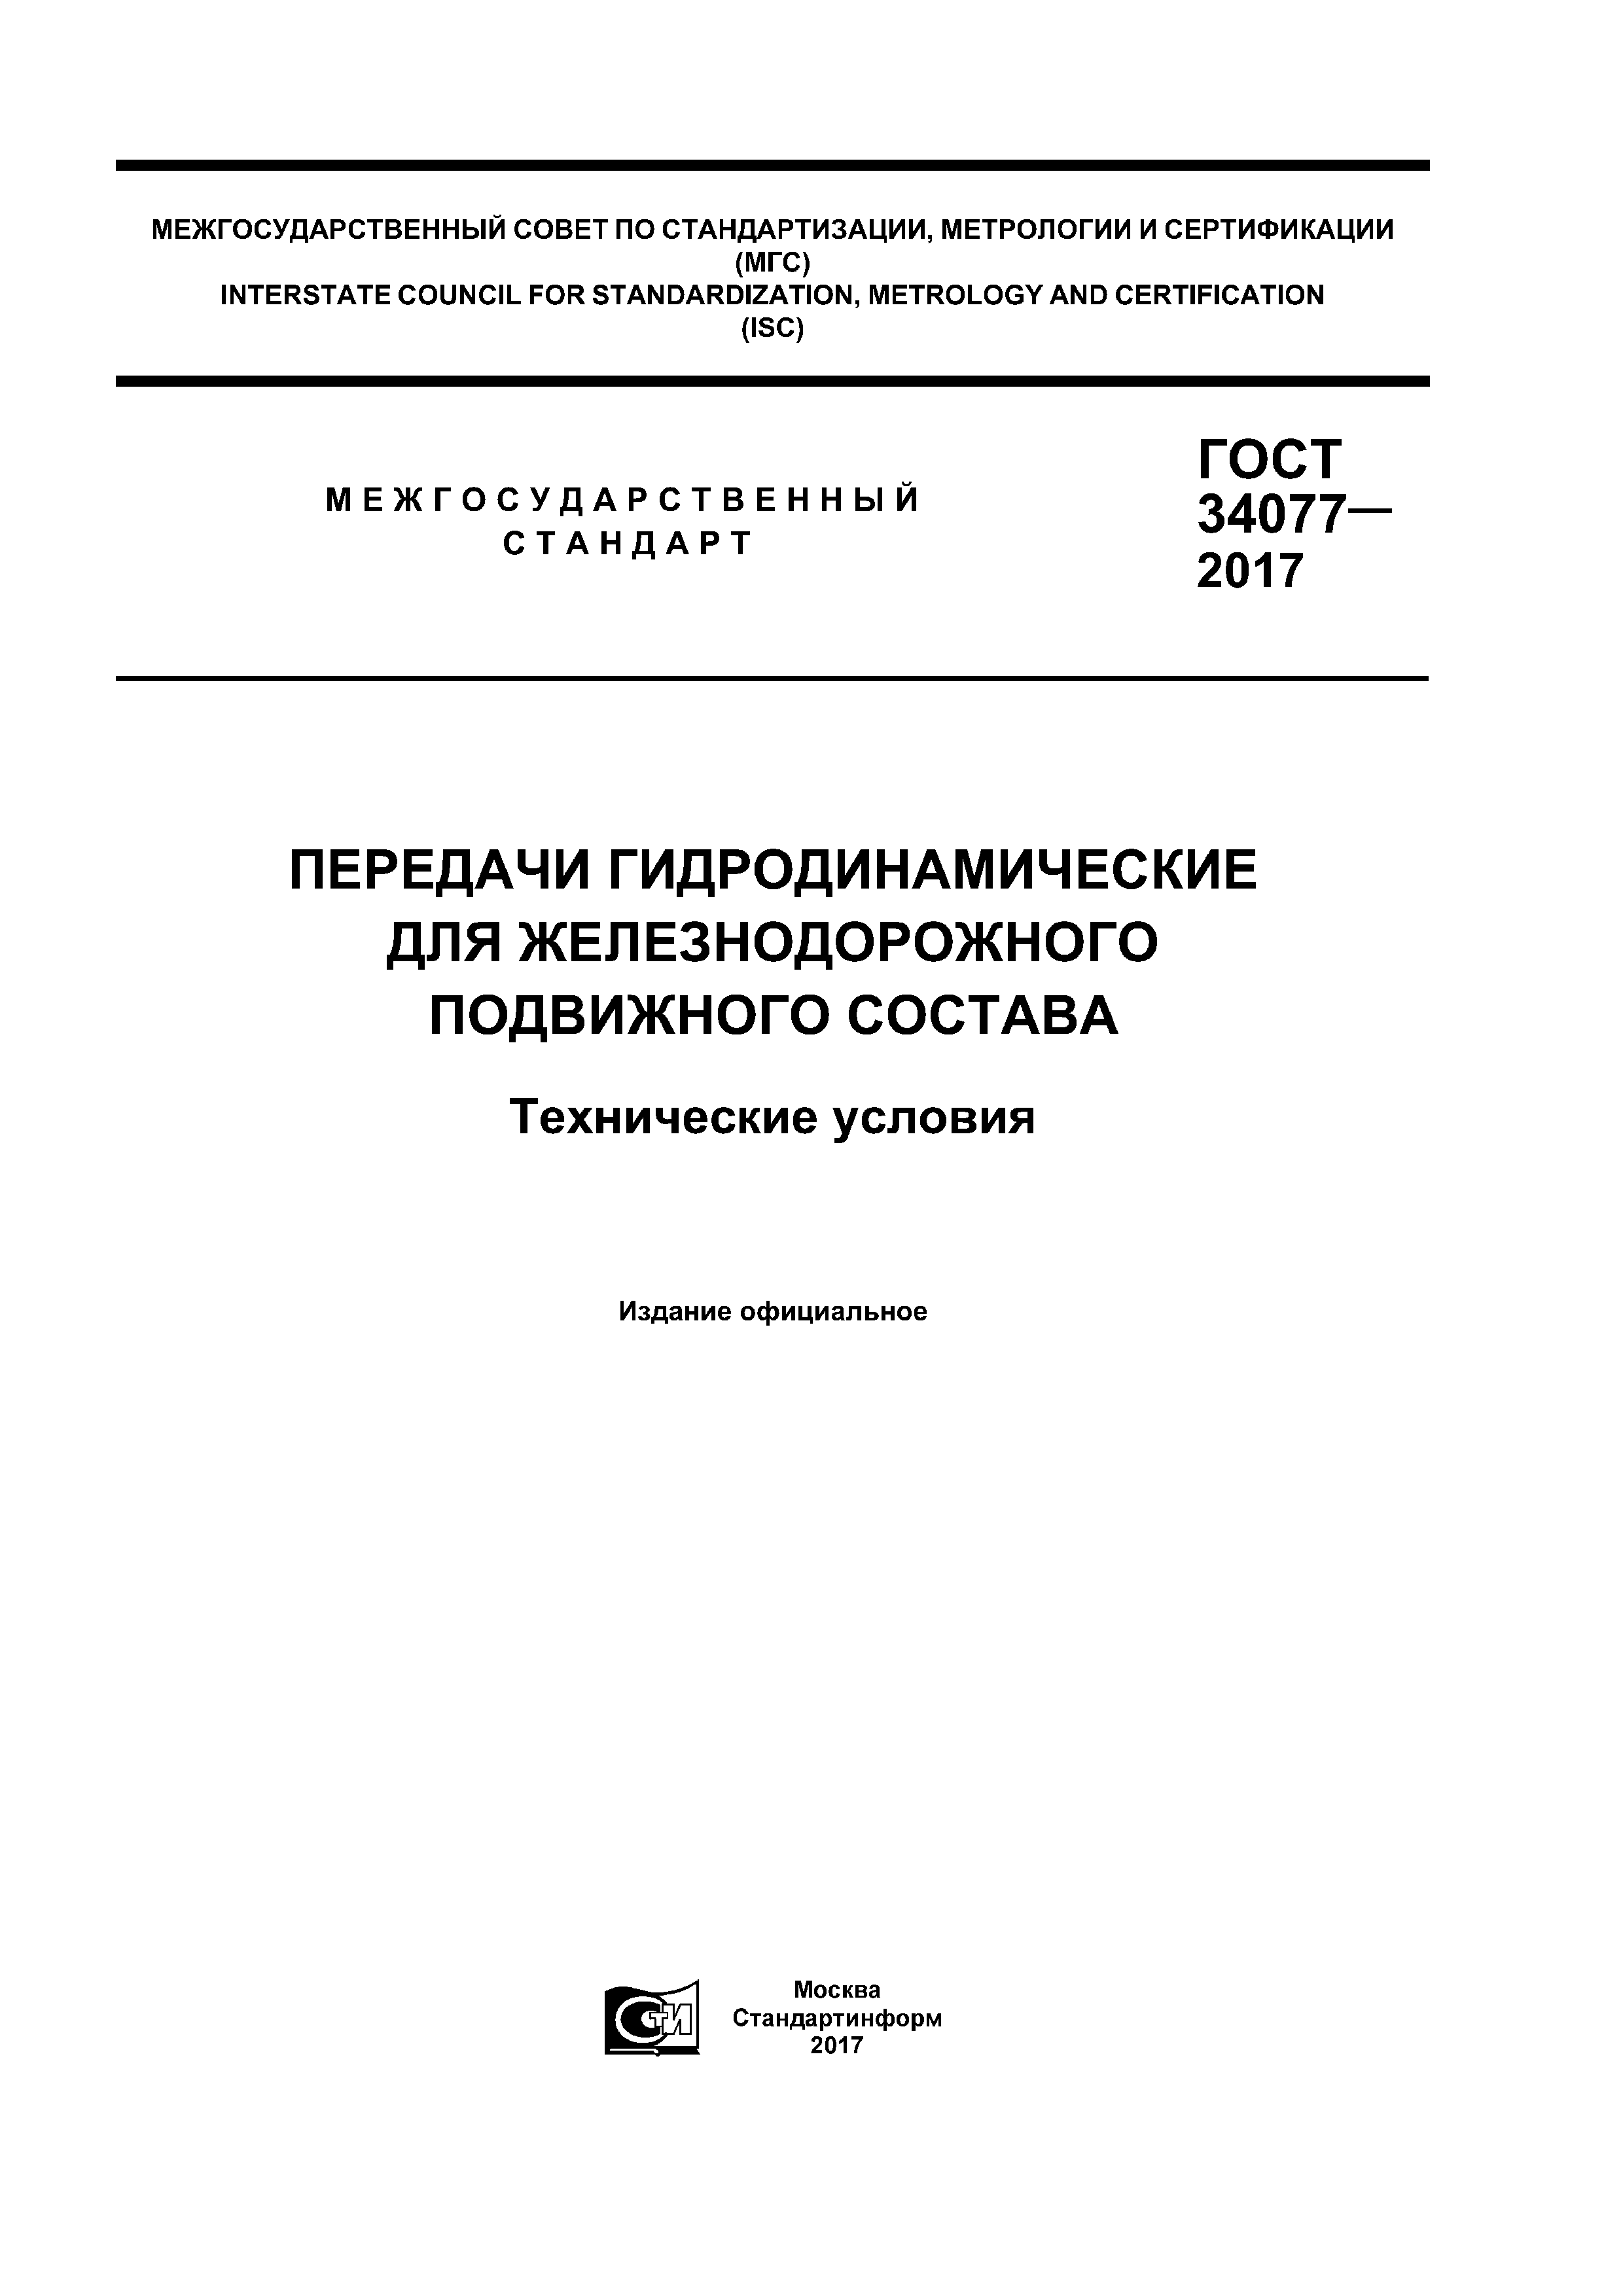 ГОСТ 34077-2017